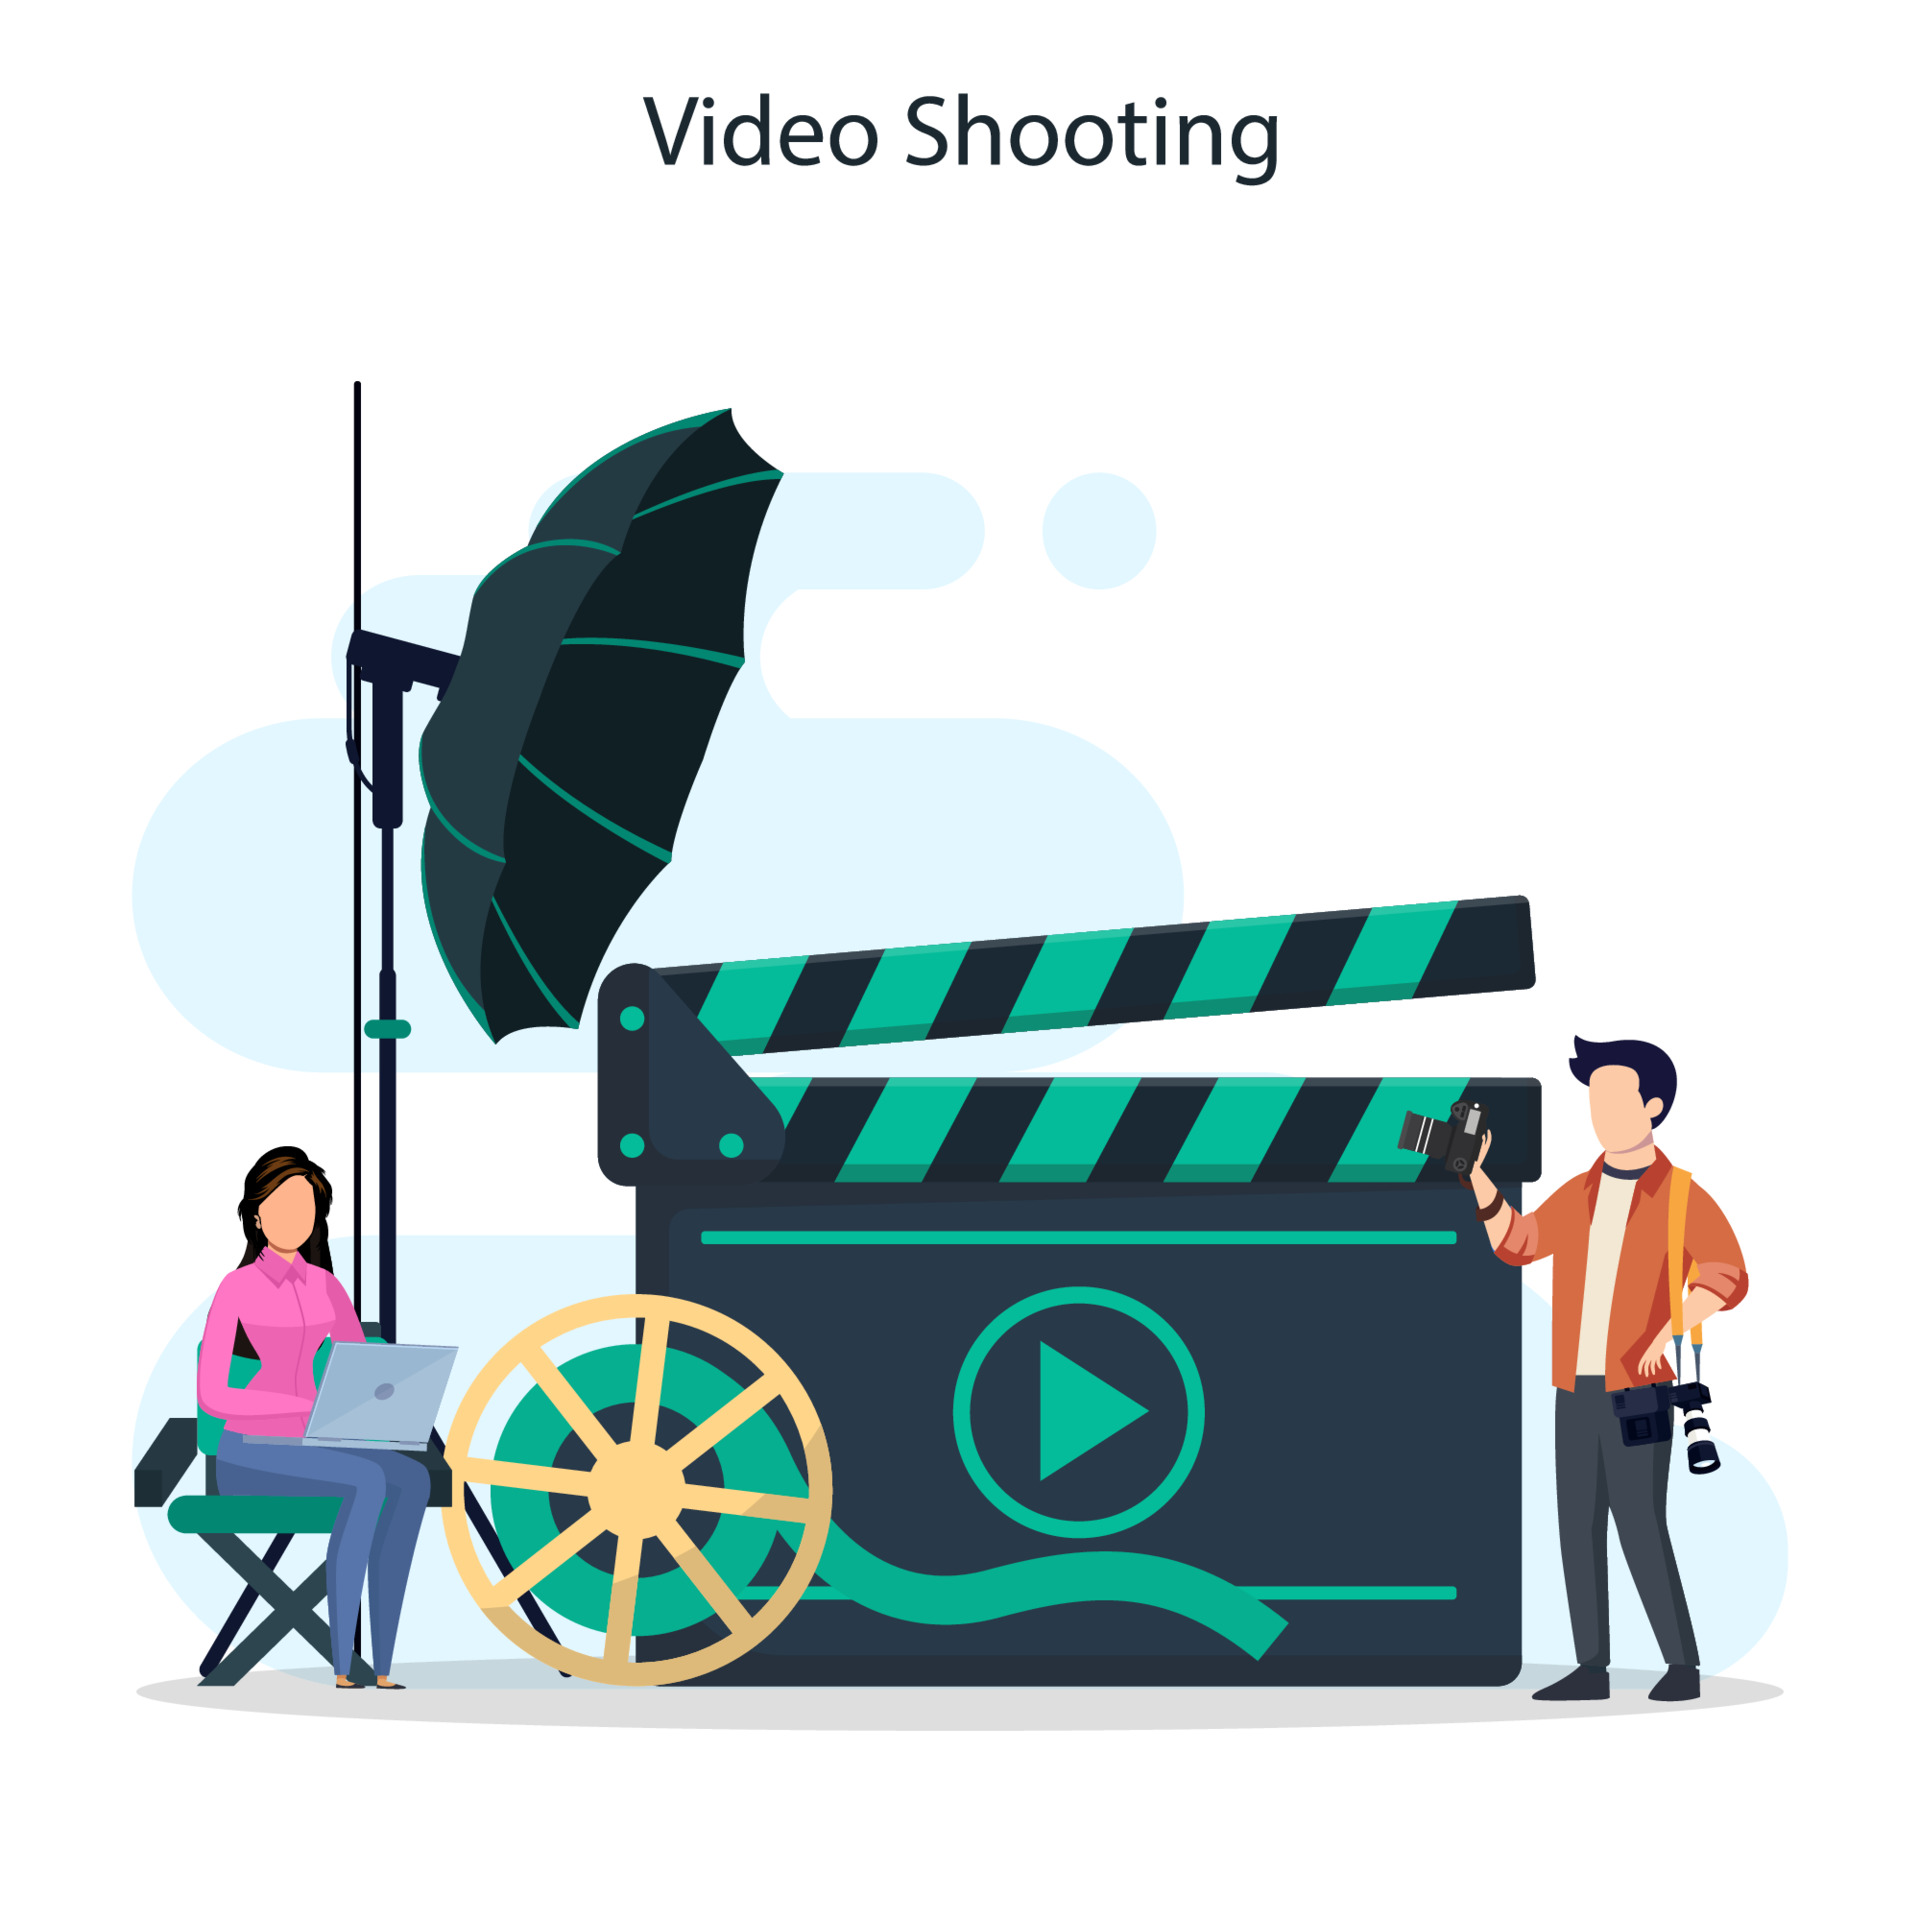 <a href="https://www.vecteezy.com/free-vector/video-shoot">Video Shoot Vectors by Vecteezy</a>